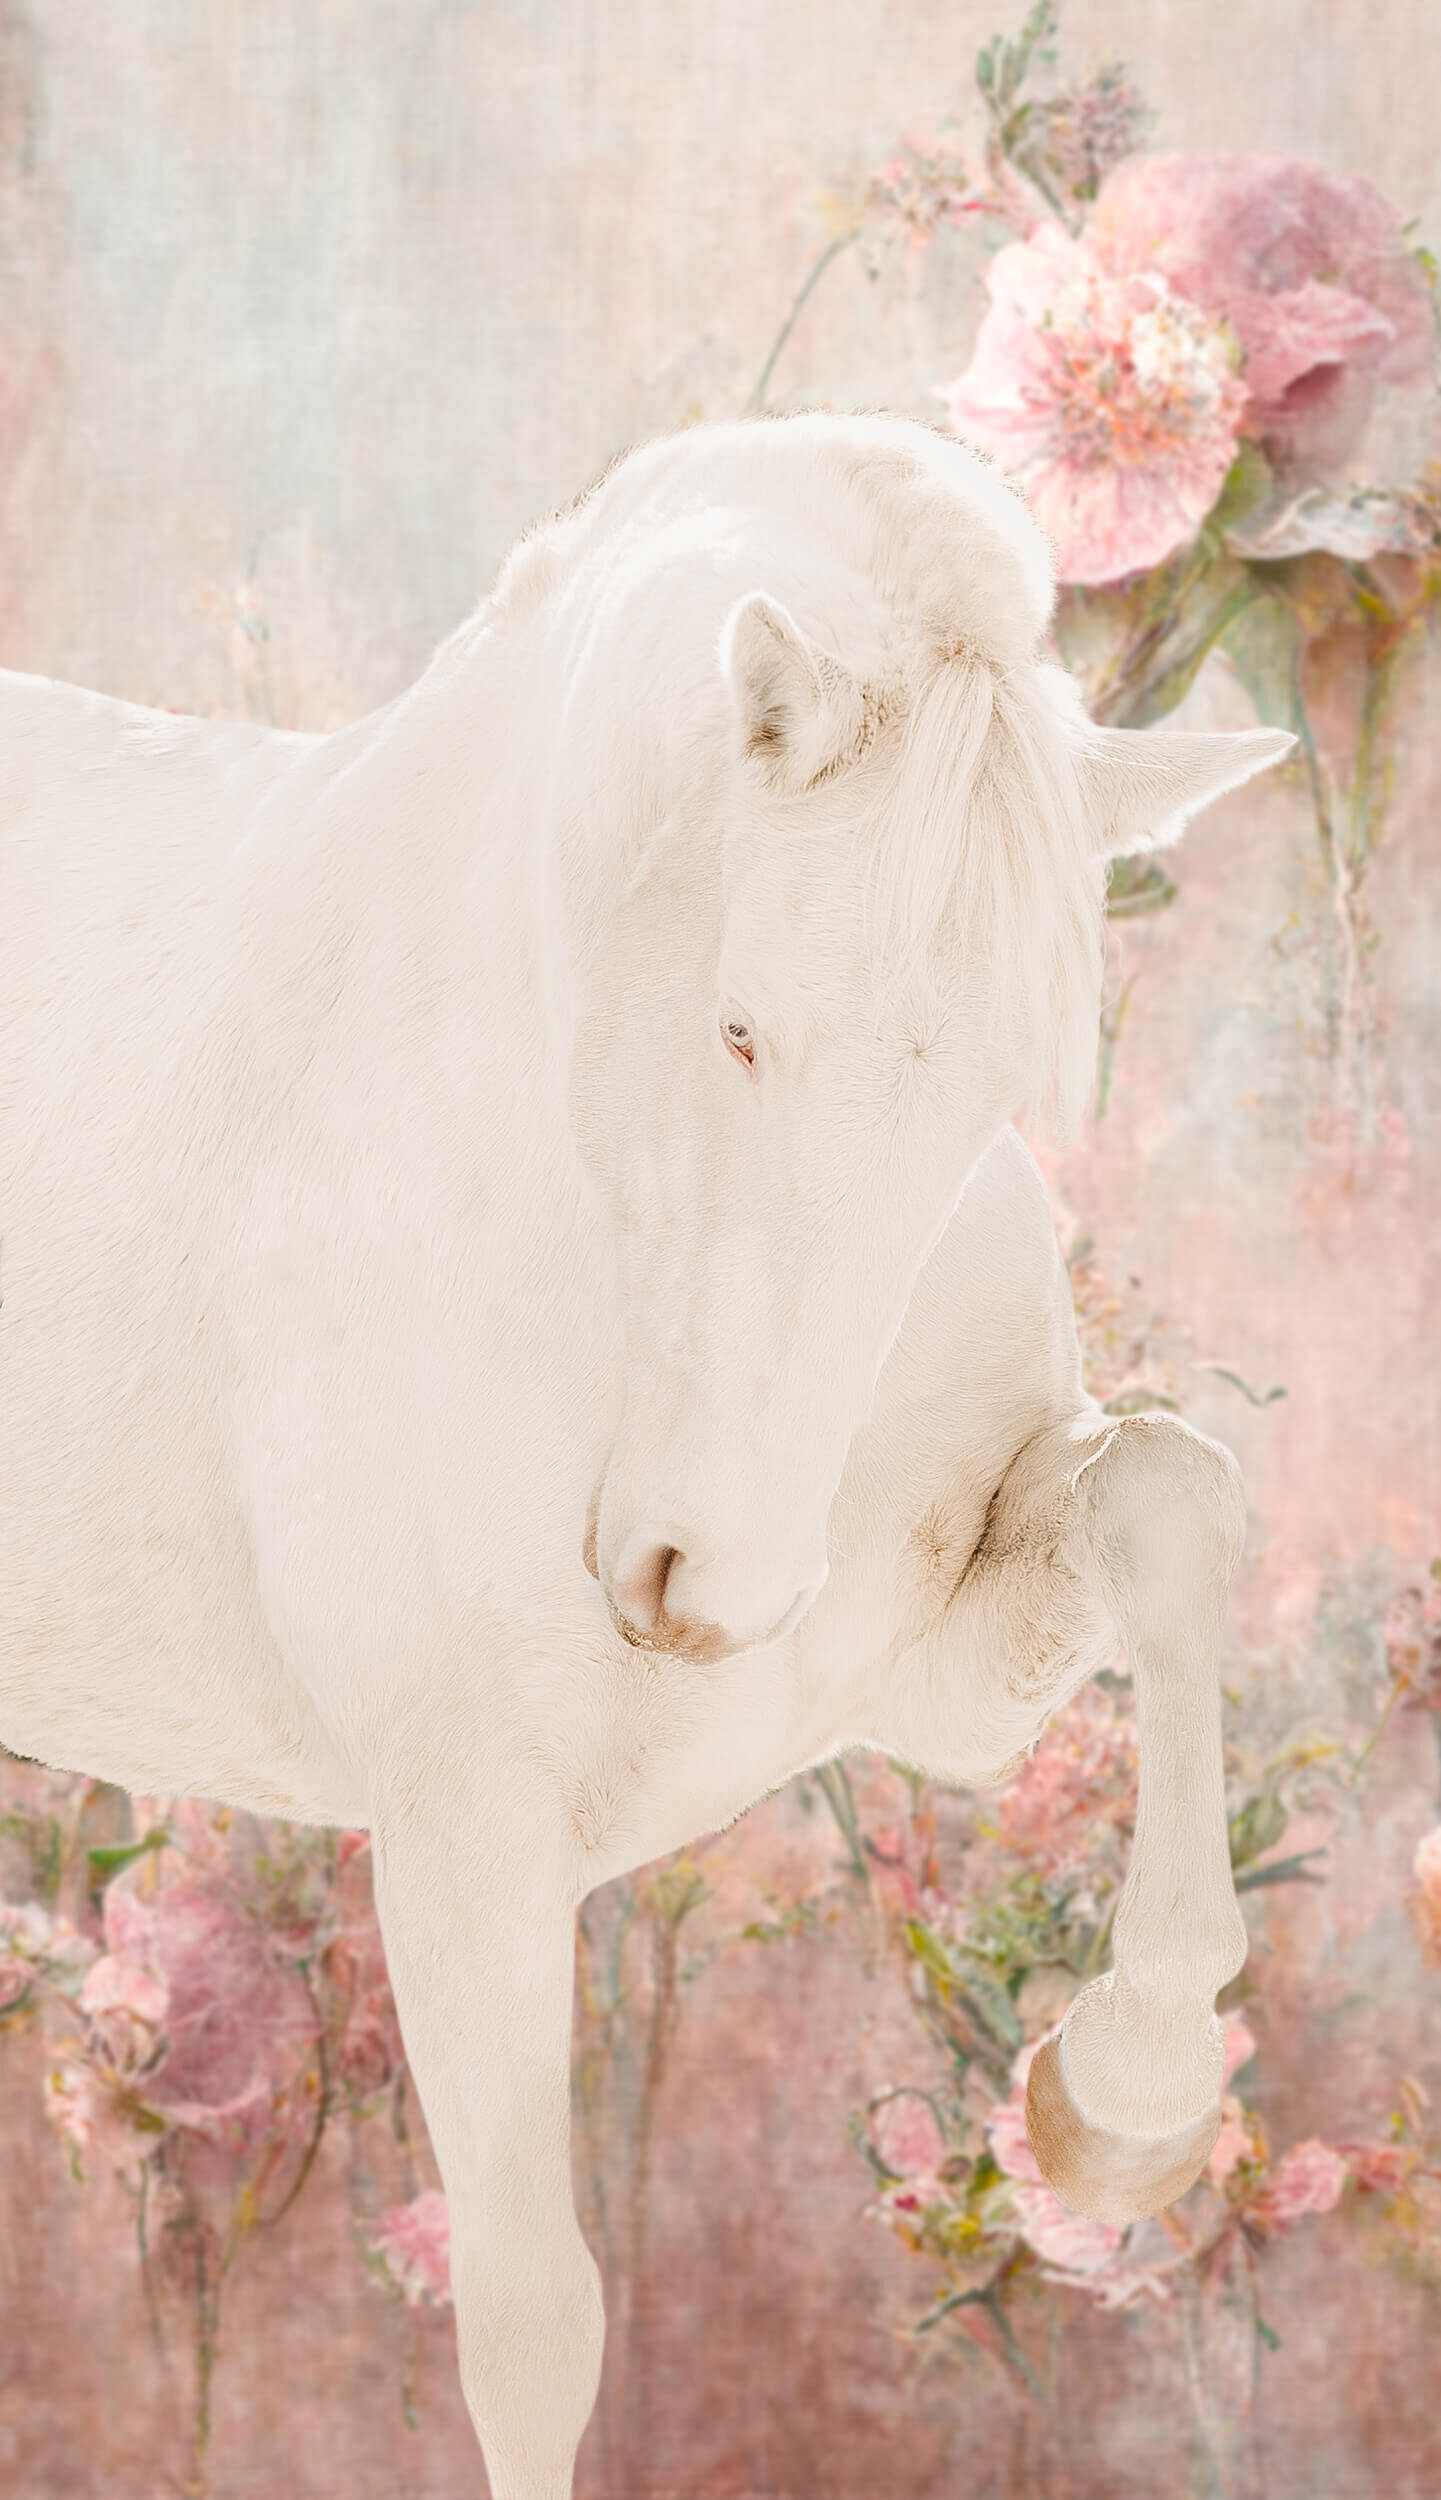 Download Unicorn Purple Pink RoyaltyFree Stock Illustration Image  Pixabay